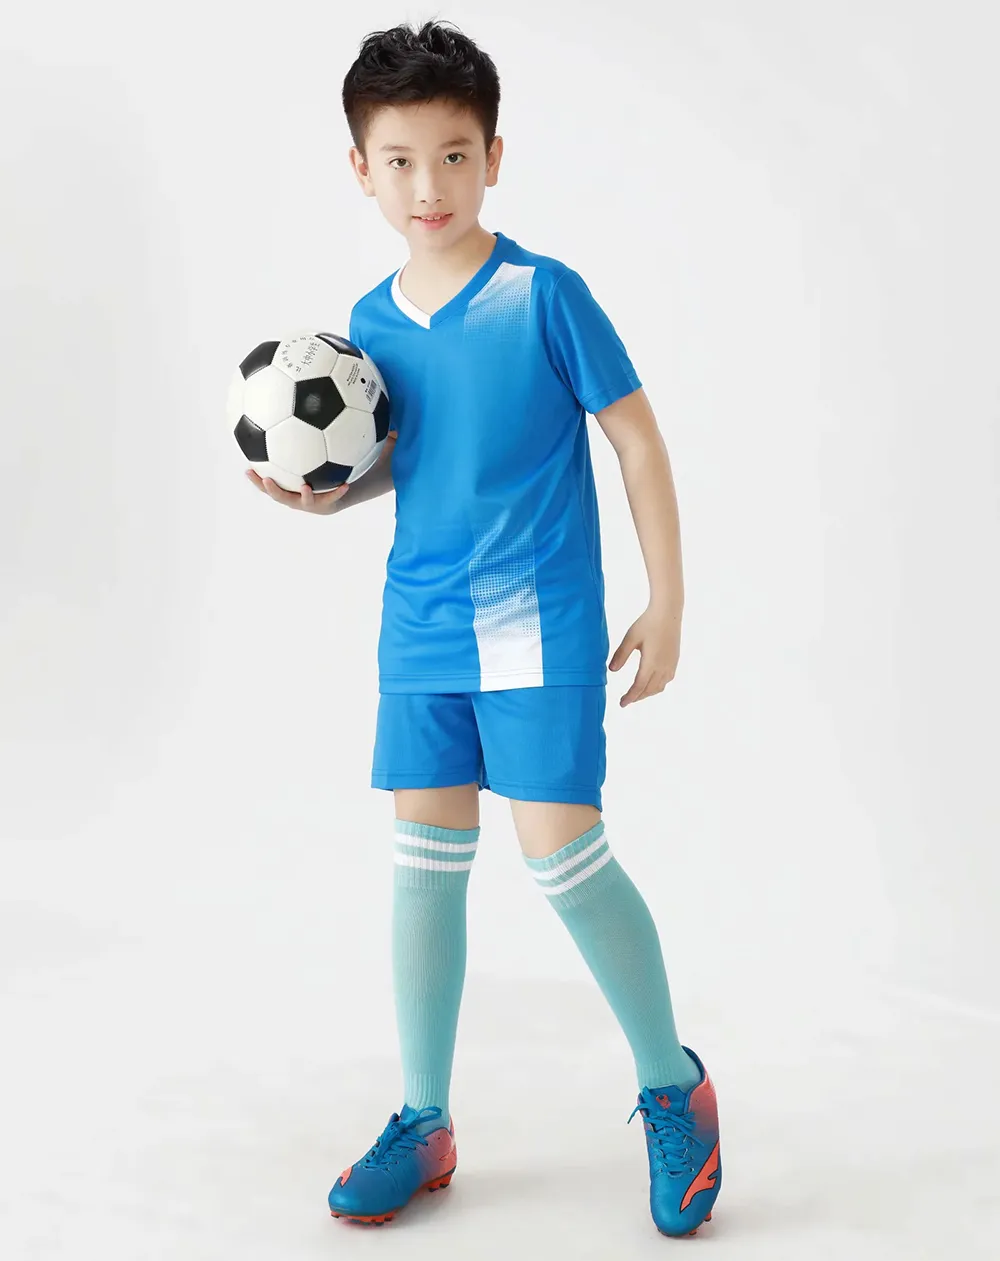 Jessie_kicks #G461 LJR aiir joordan 5 Design 2021 Camisetas de moda Ropa para niños Ourtdoor Sport